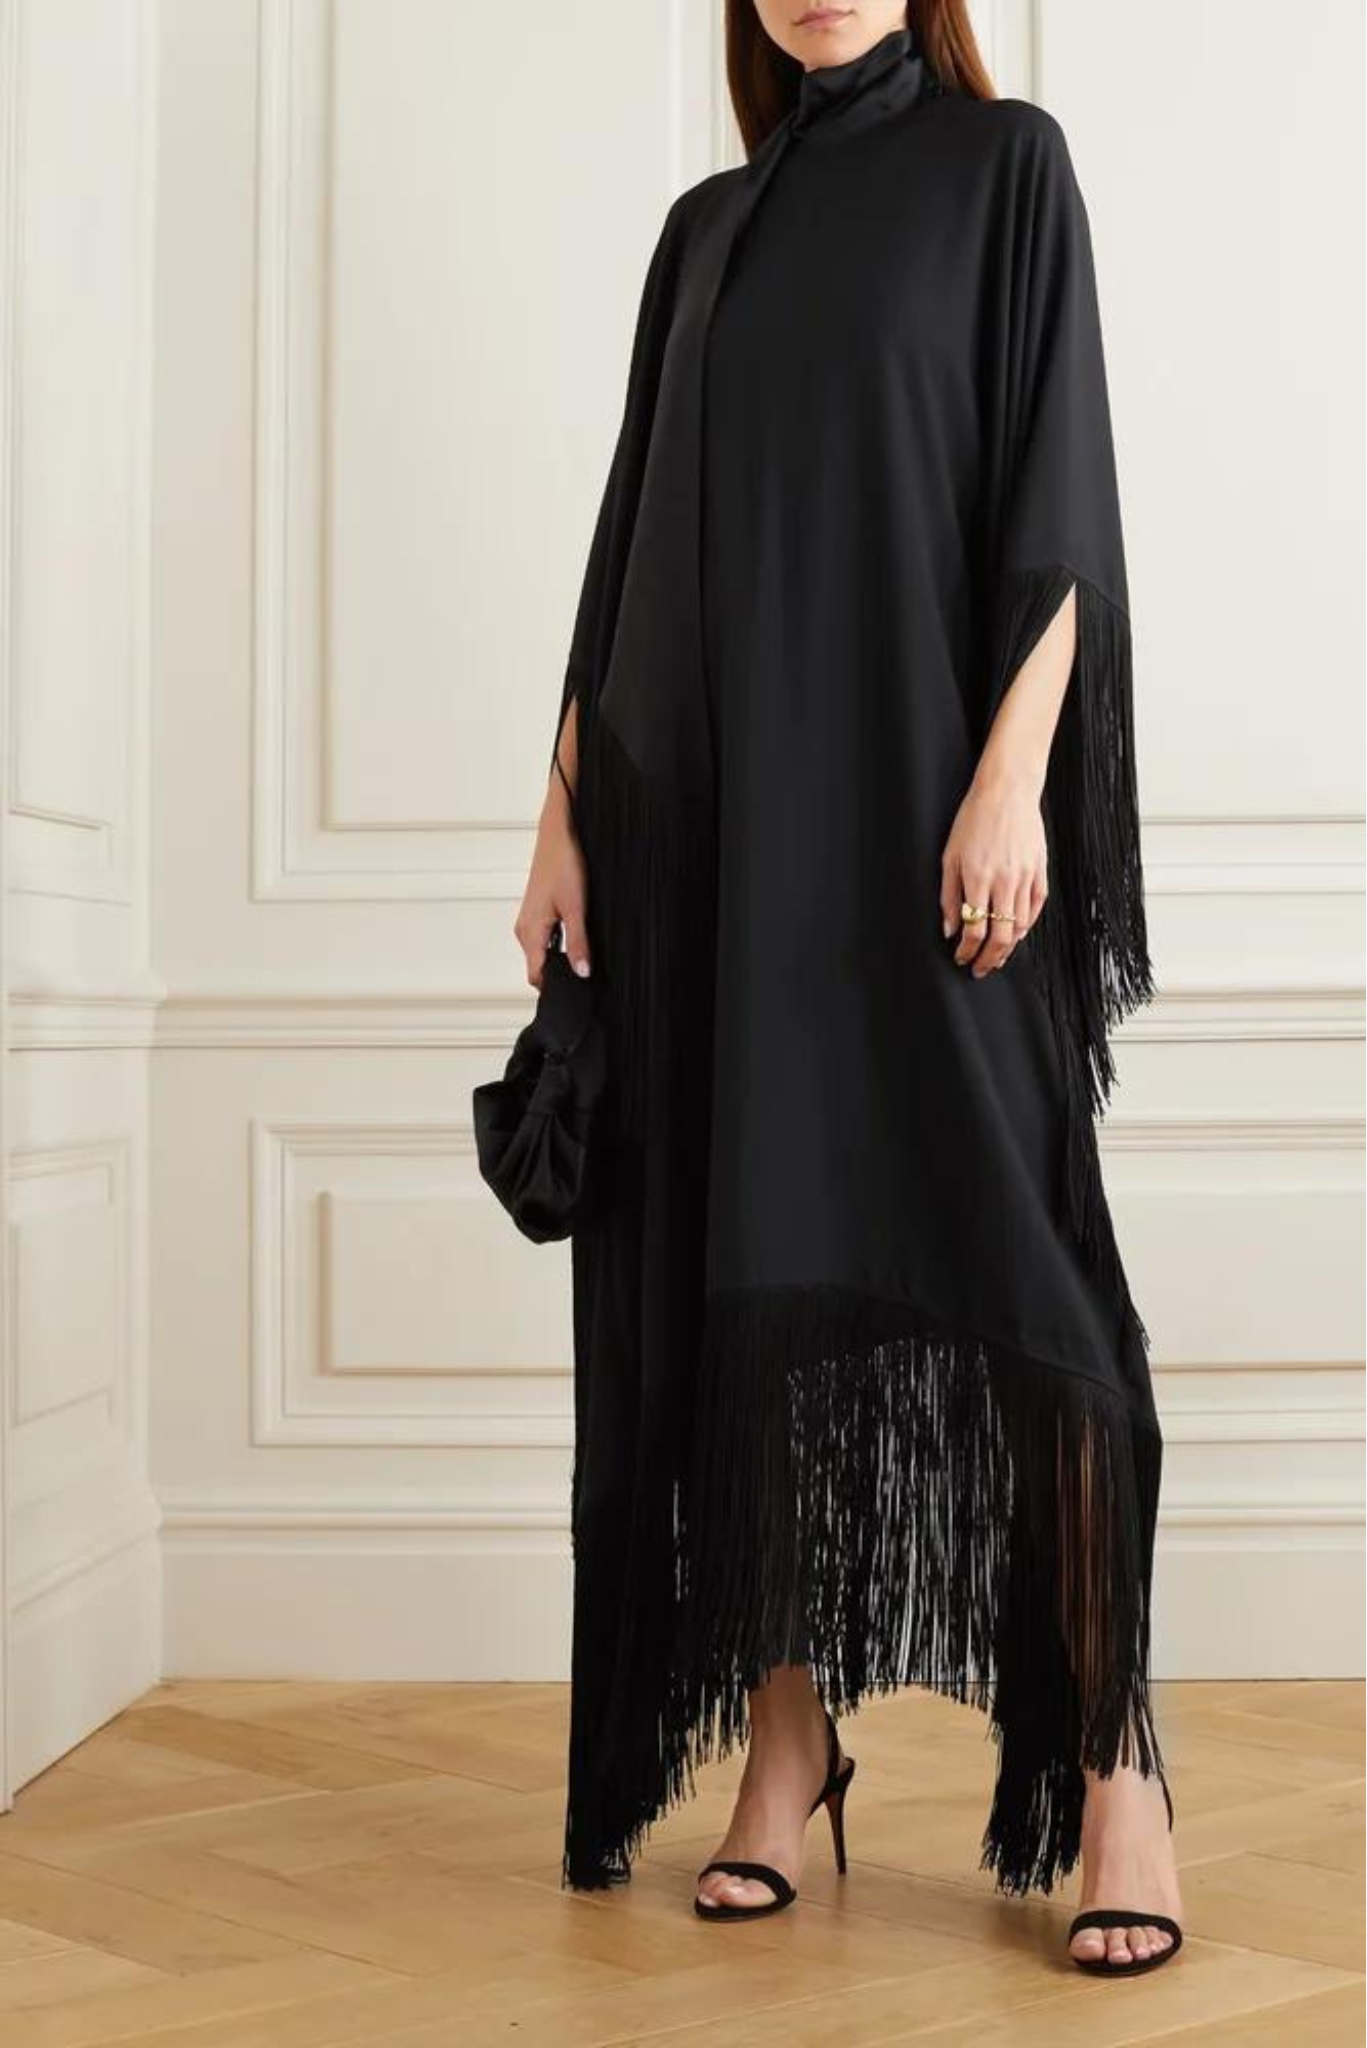 Ravishing Black Party Wear Dress | Latest Kurti Designs